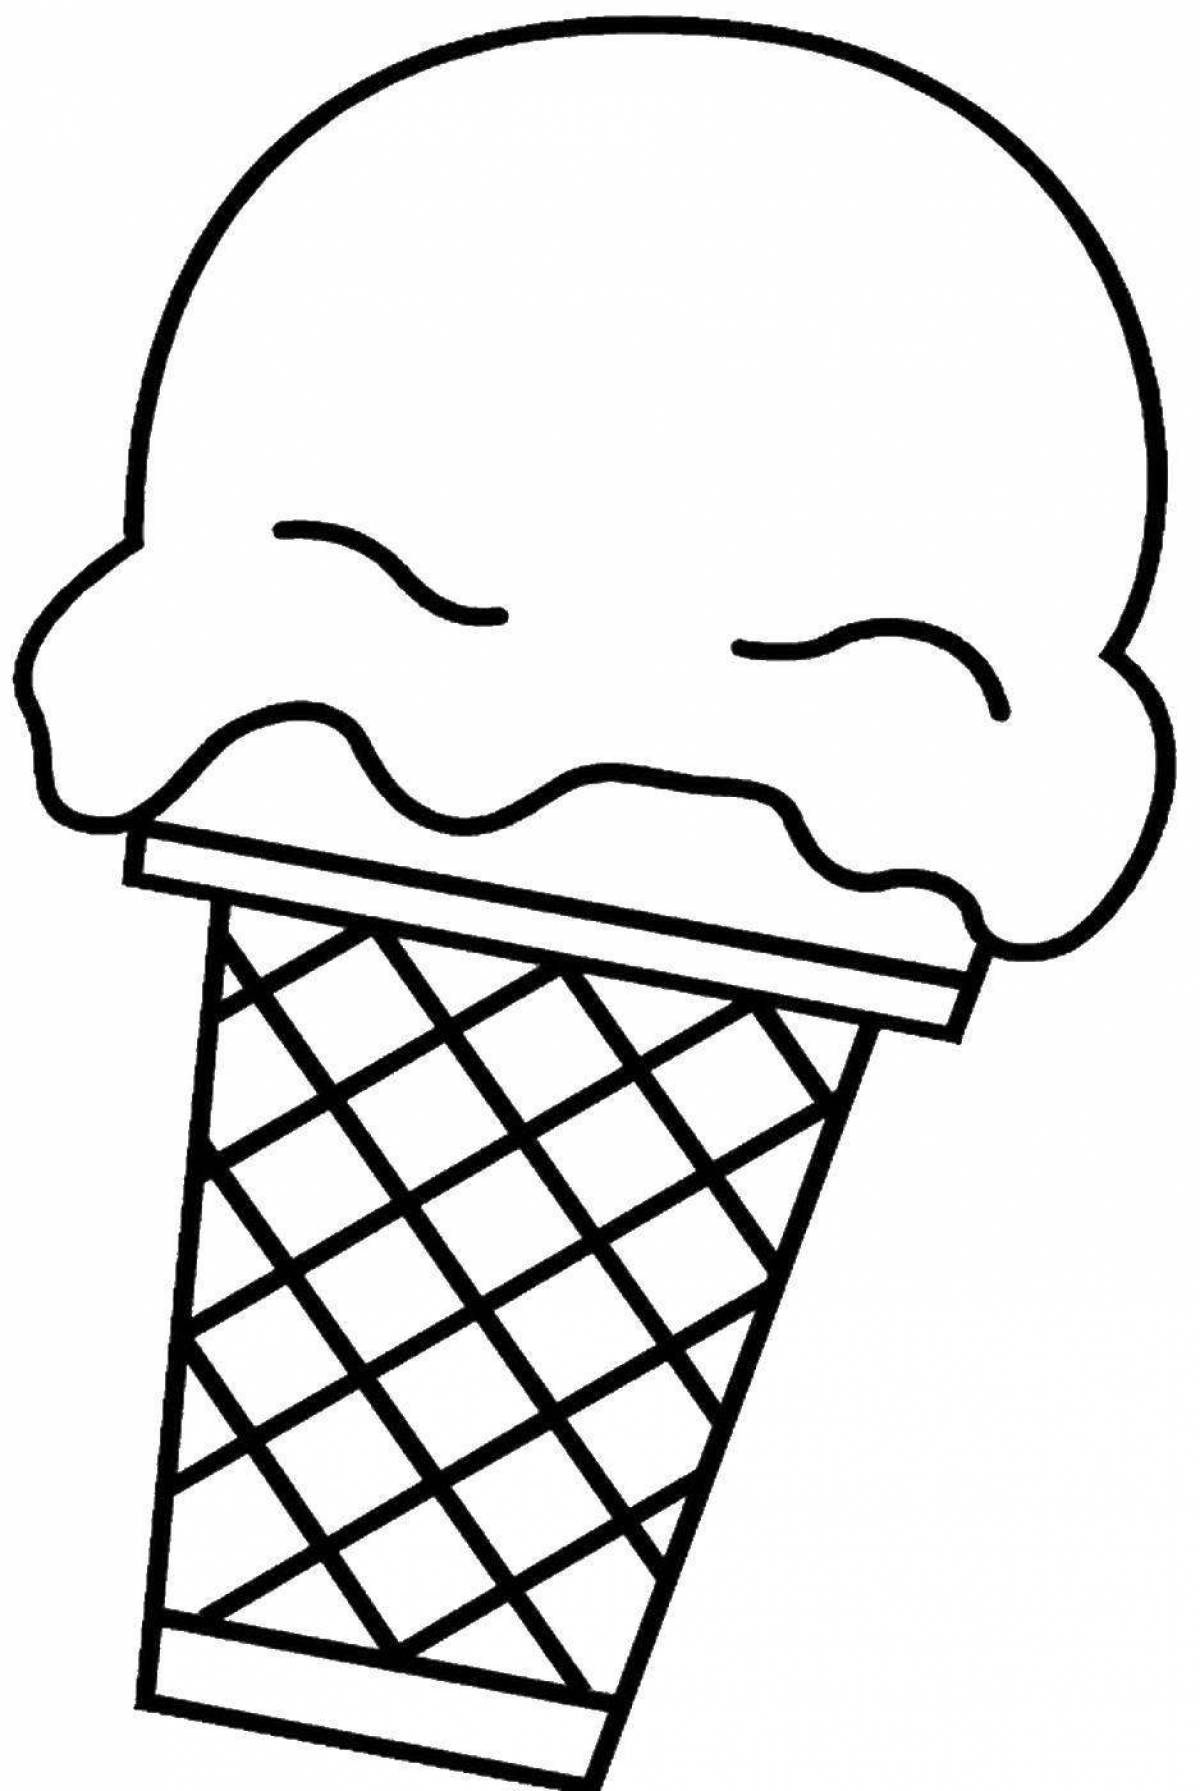 Coloring appetizing ice cream